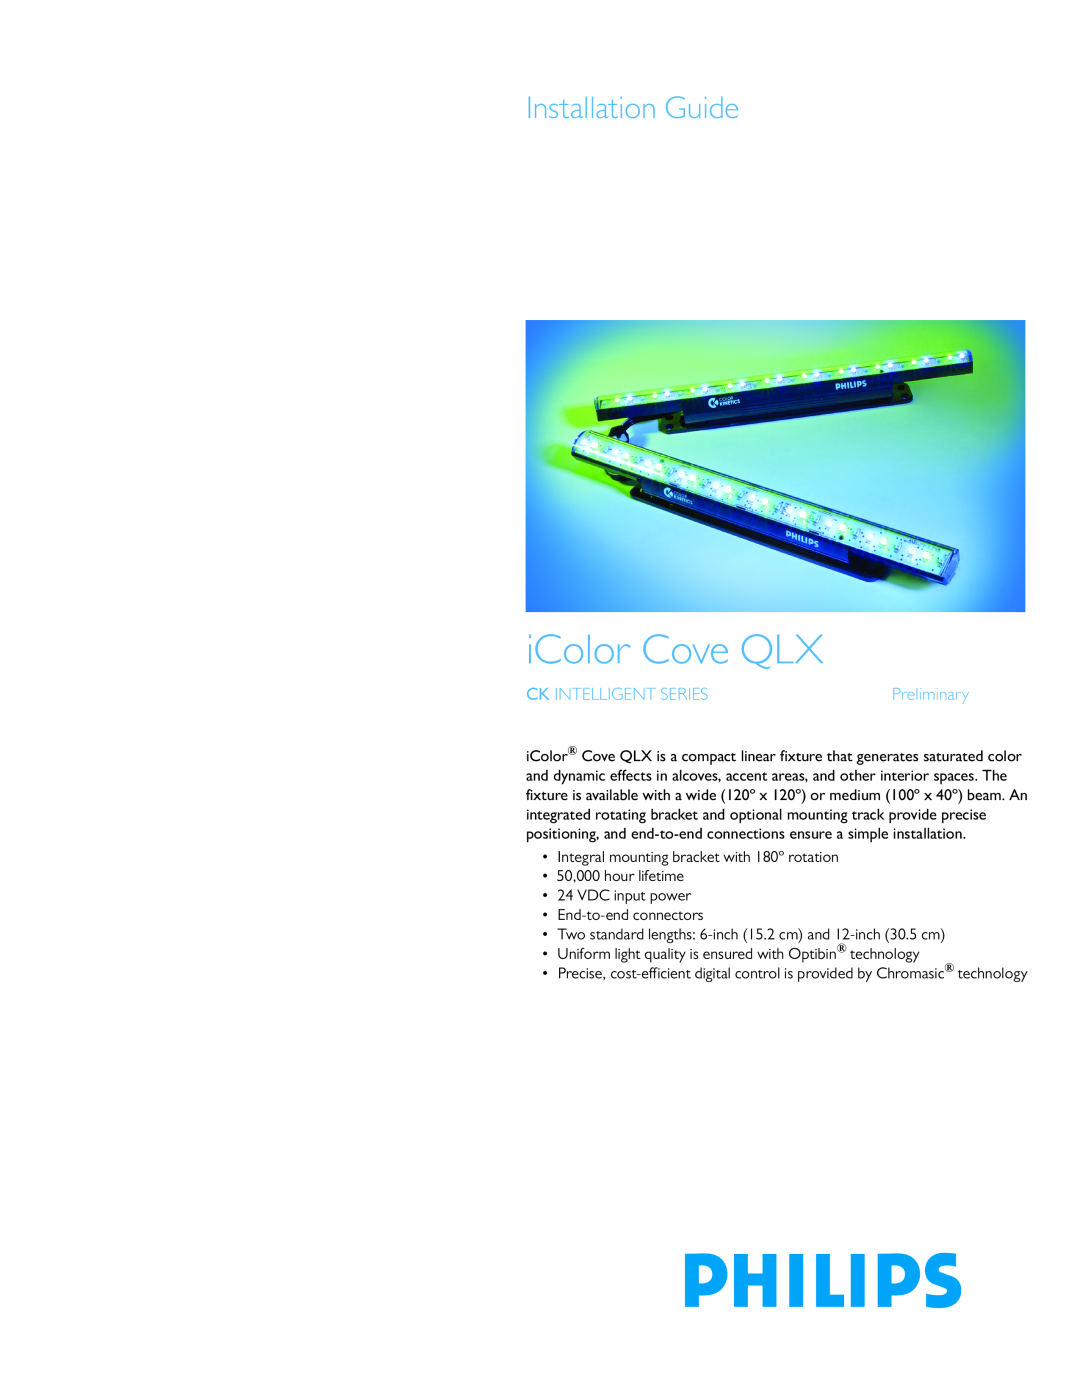 Philips iColor Cove QLX manual Installation Guide, Ck Intelligent Series, Preliminary 